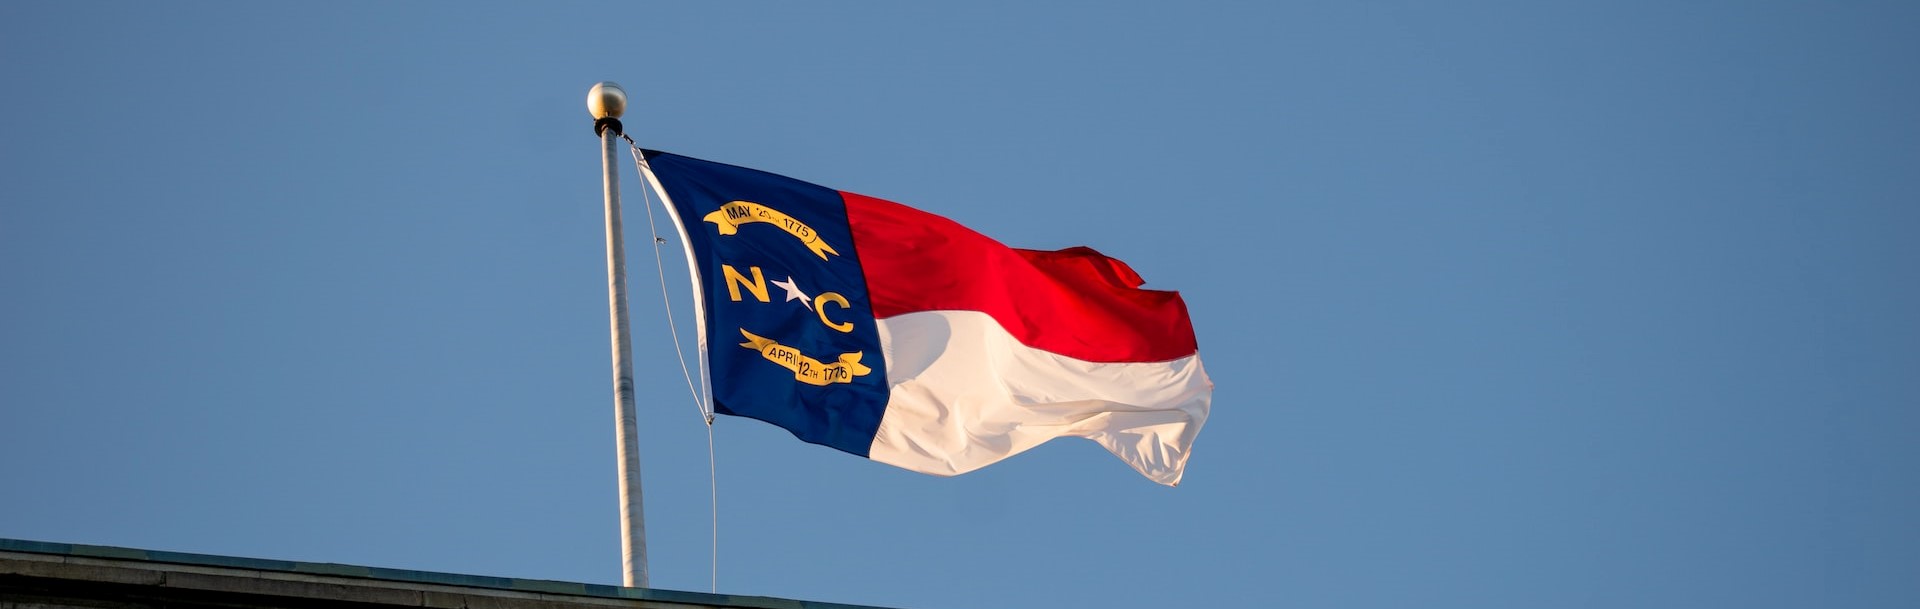 The flag of North Carolina | Breast Cancer Car Donations